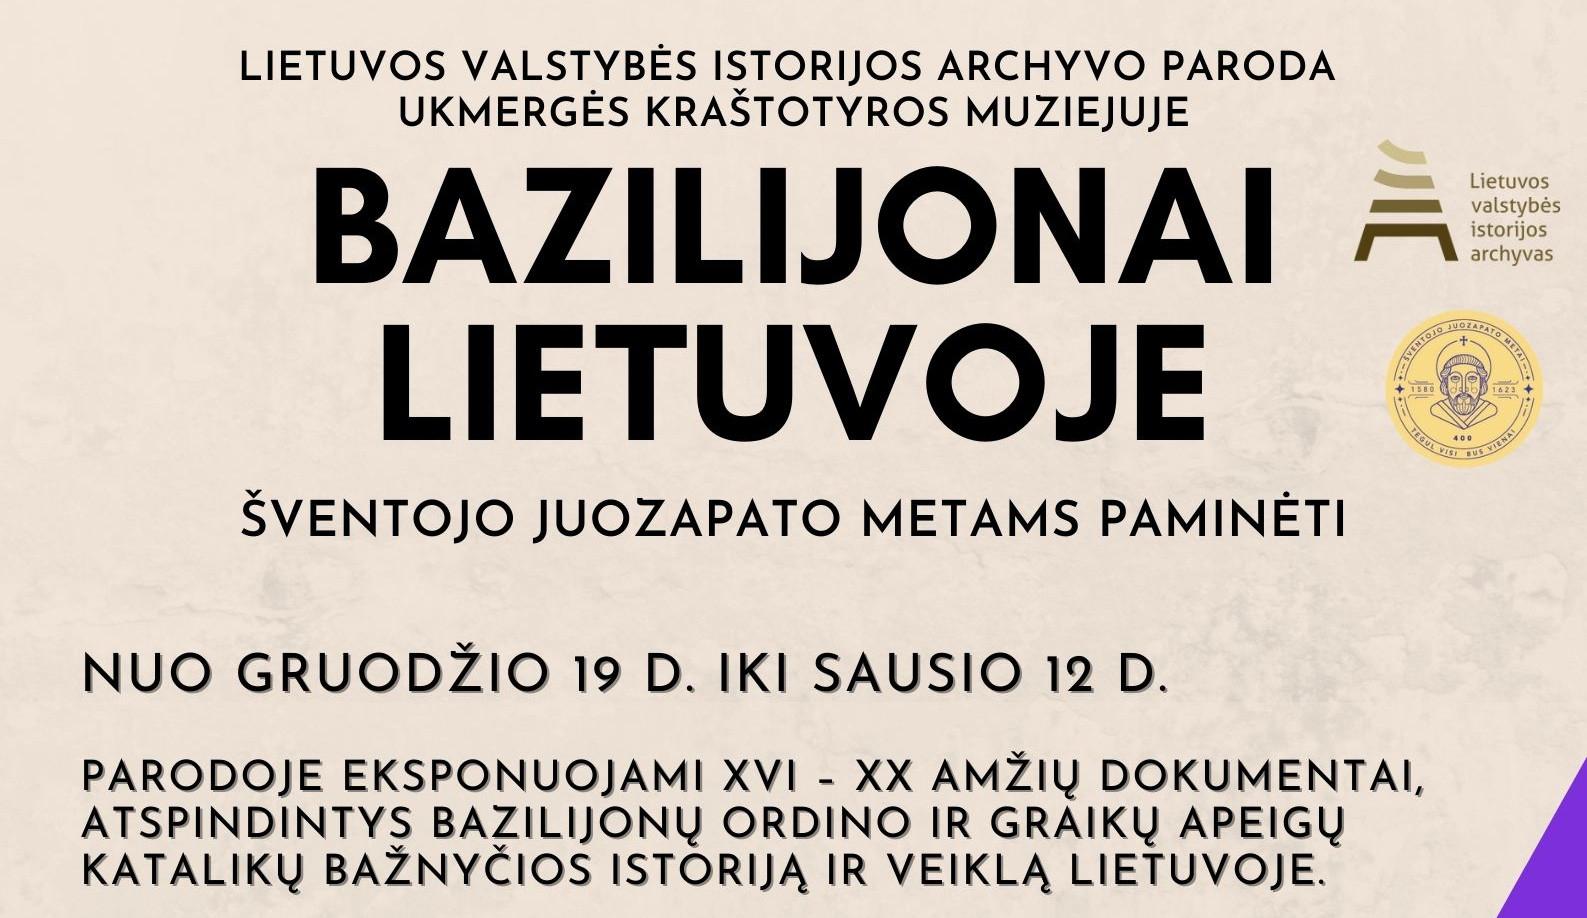 Muziejuje bus pristatyta bazilijonų Lietuvoje istorija /